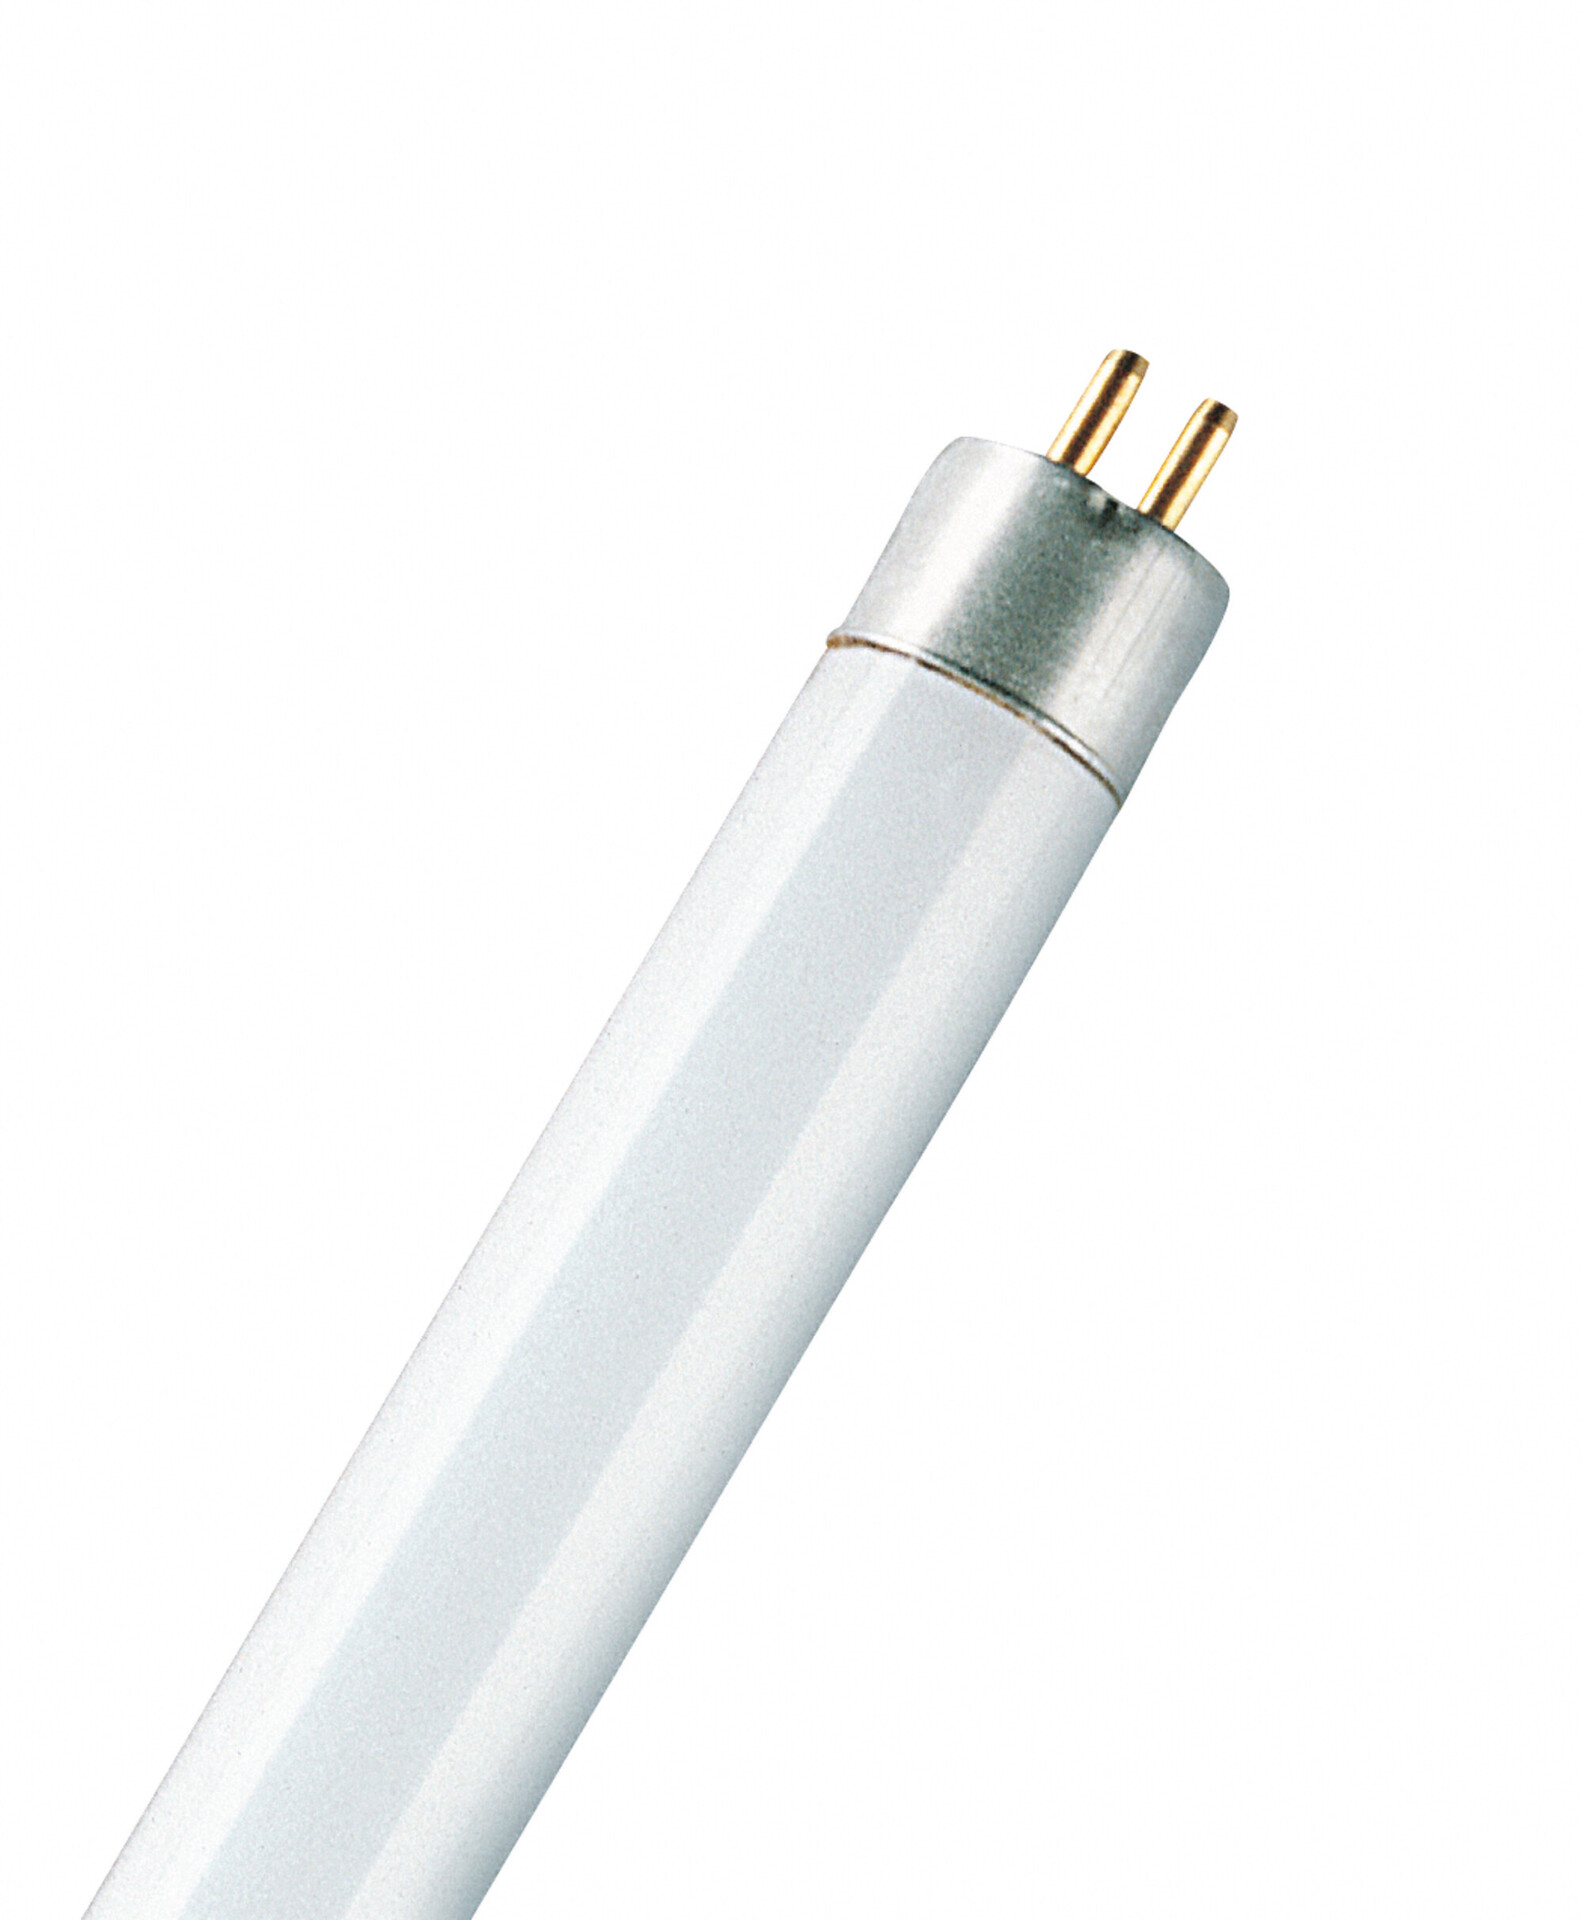 osram leuchtstofflampe 16mm kurze stabform g5, 270lm 4000k dim